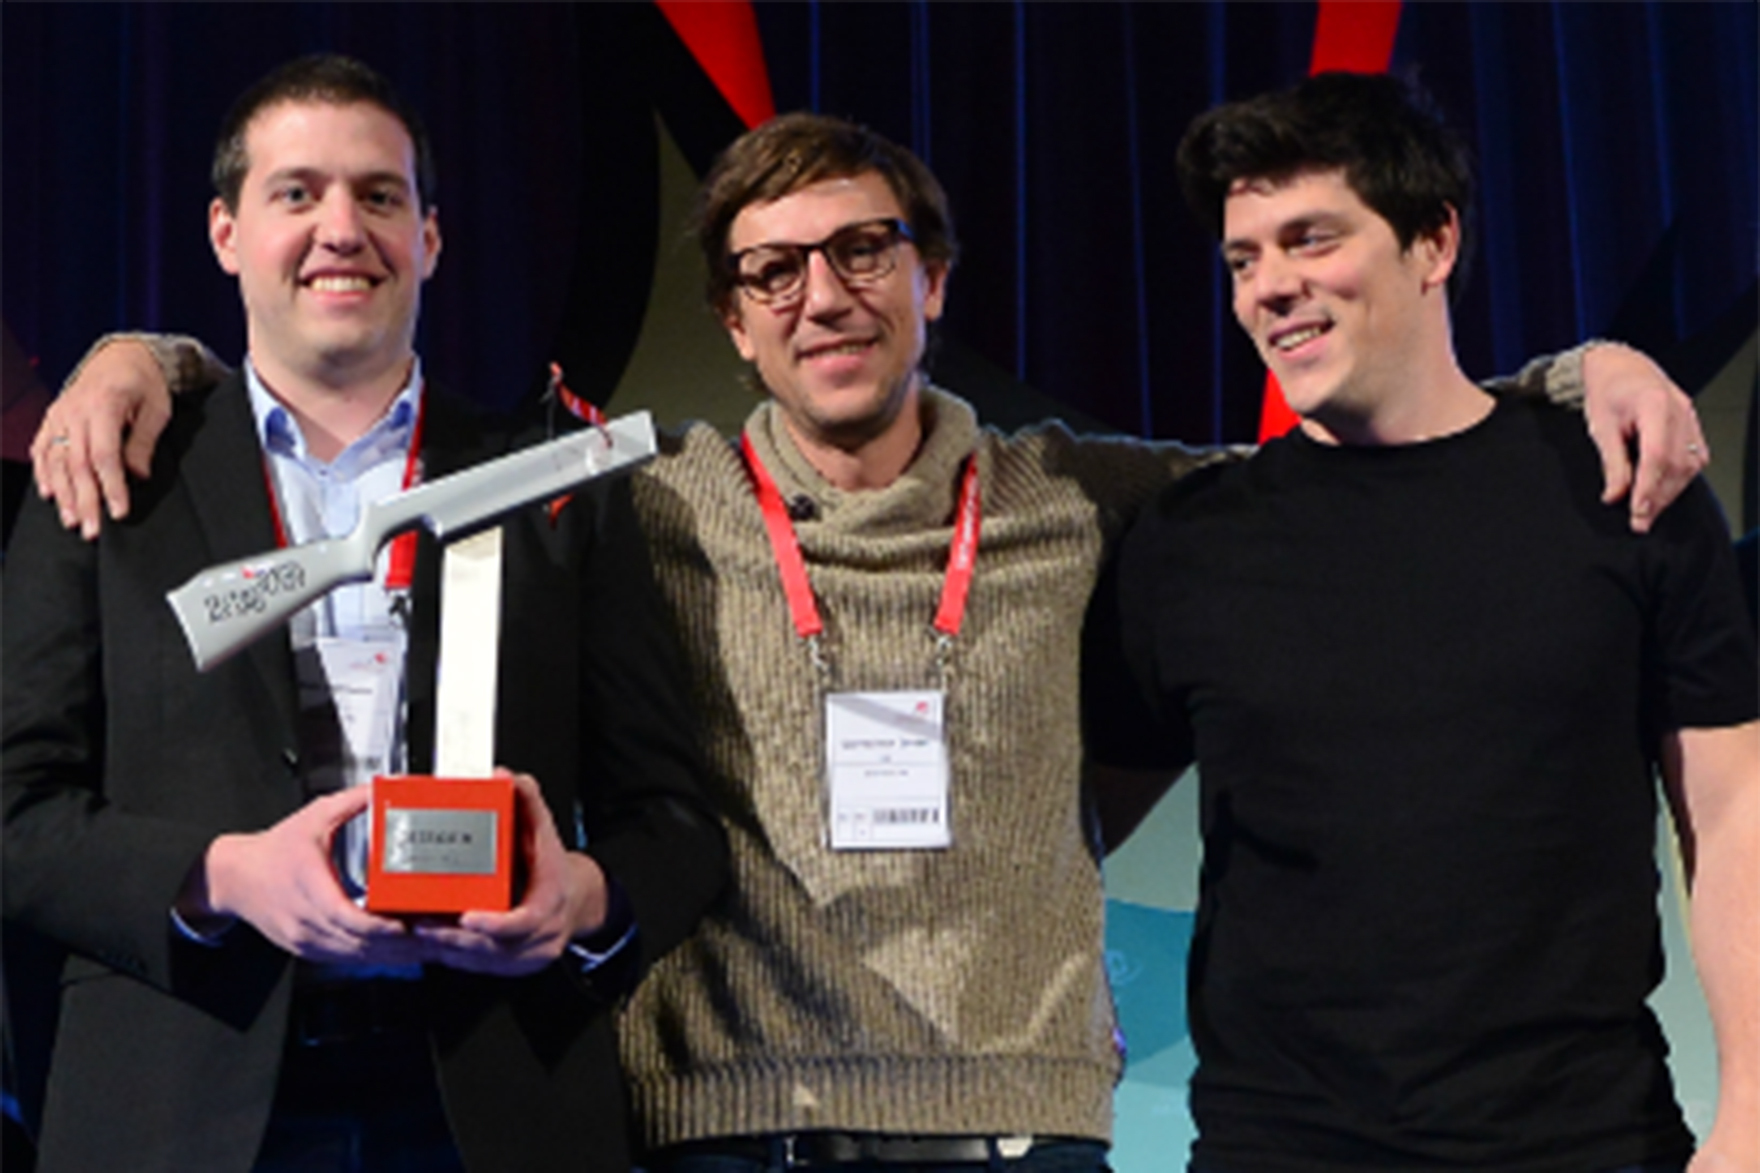 The three winners of the Swiss Technology Award 2018